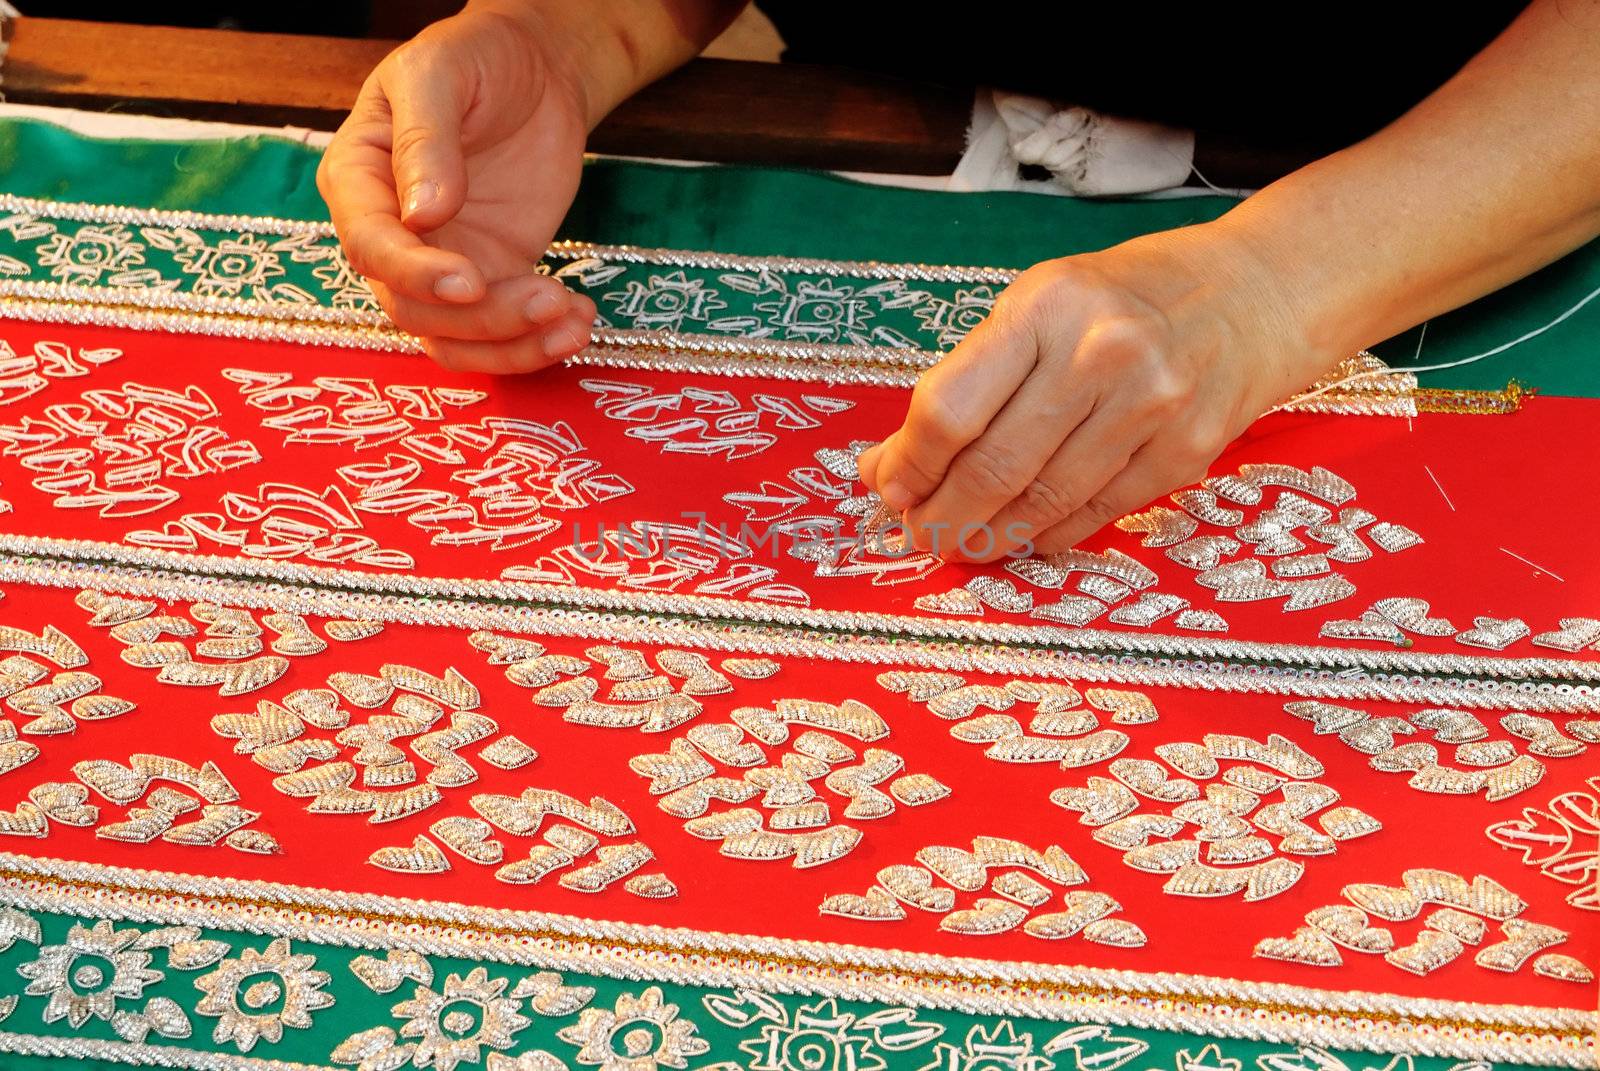 Female Hand stitching cloth to make ancient Thai pattern fabric 